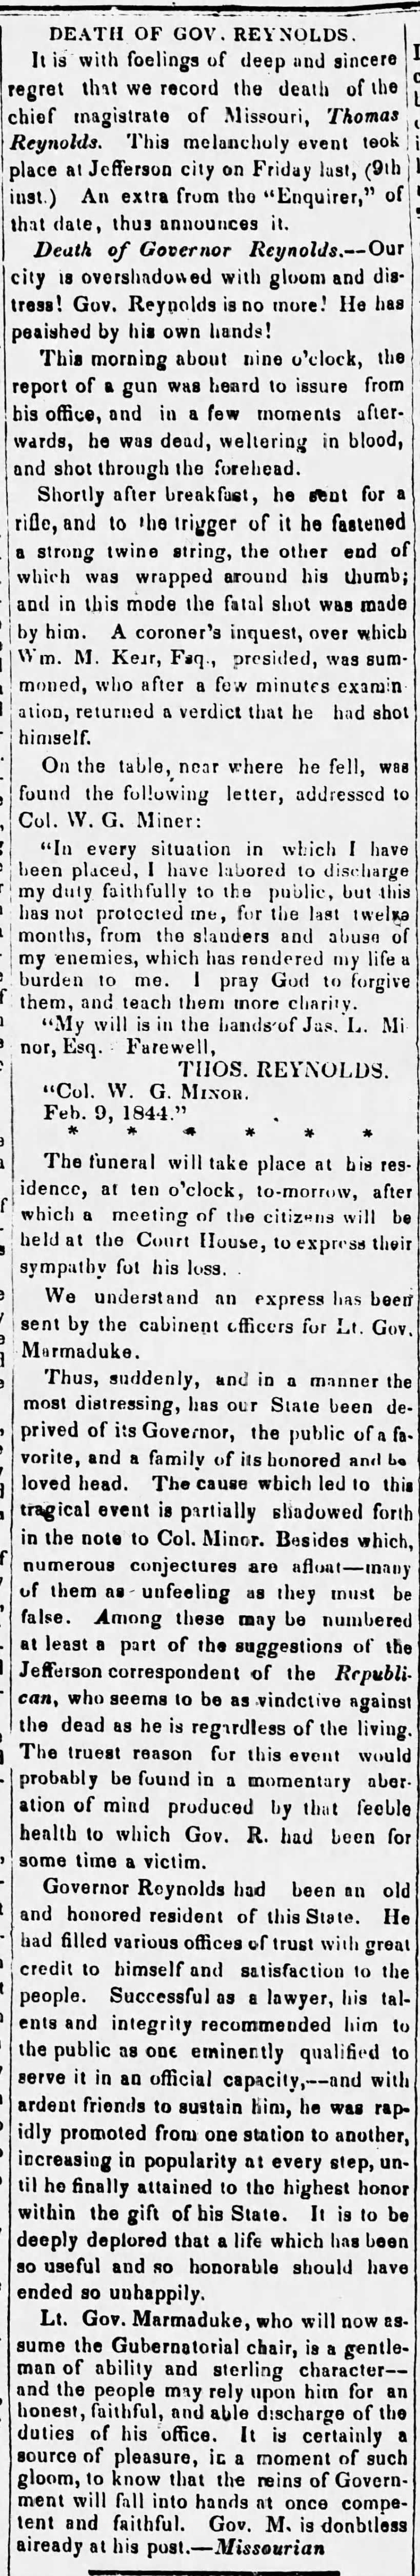 Death of Governor Thomas Reynolds